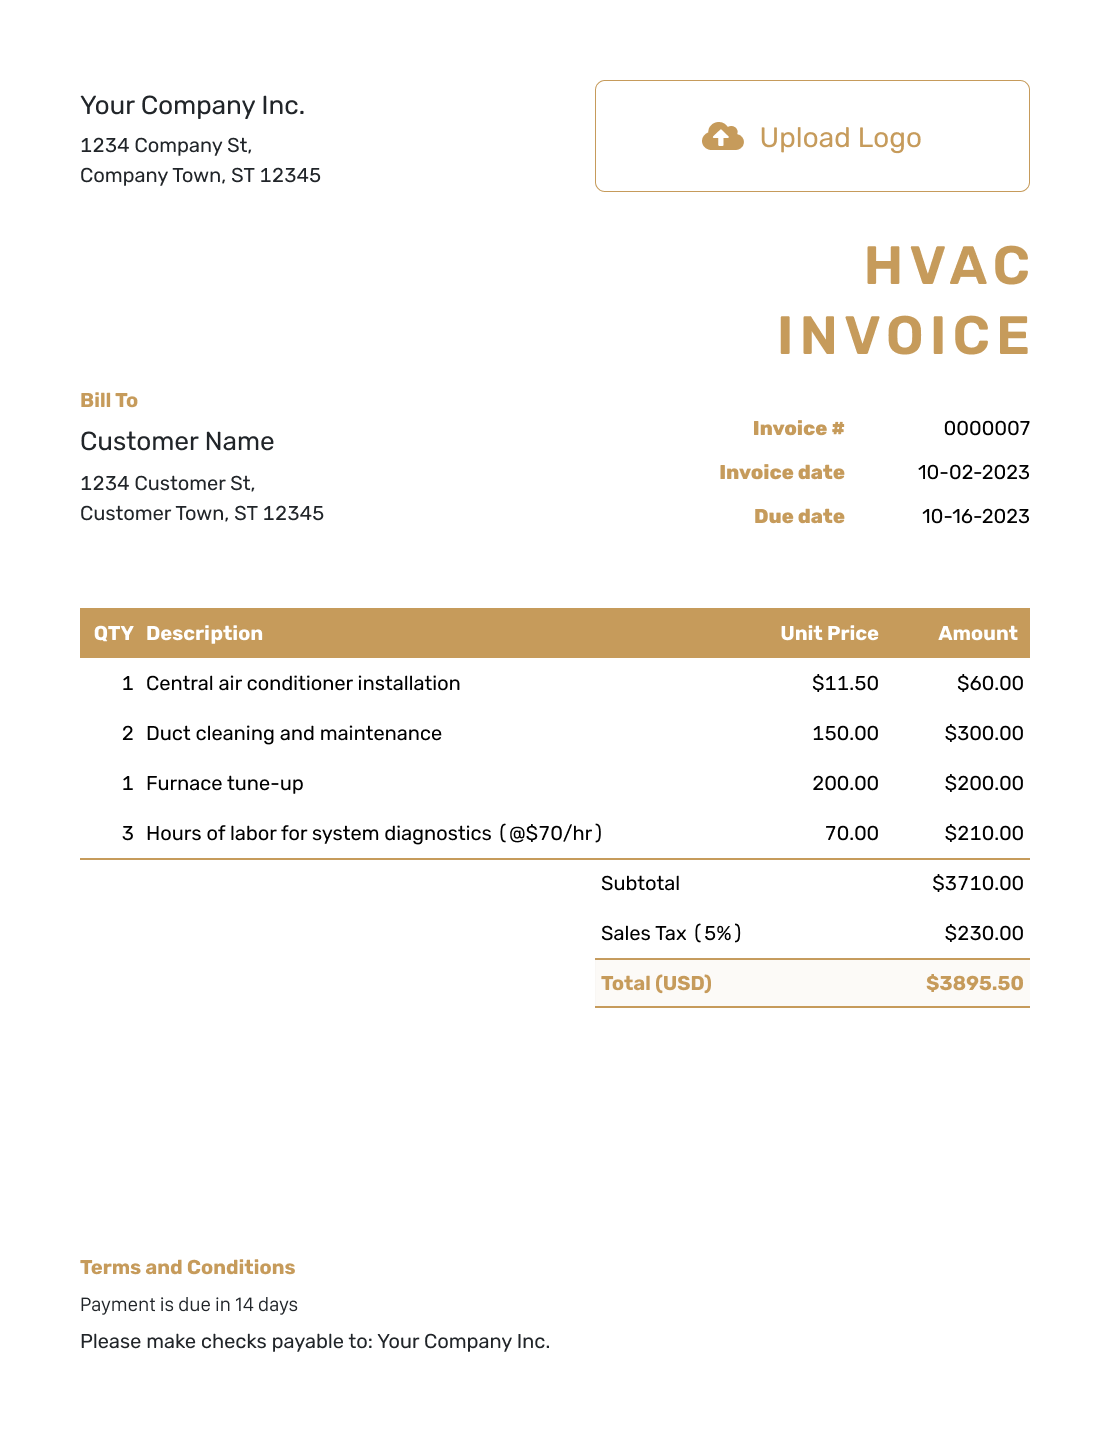 Basic HVAC Invoice Template